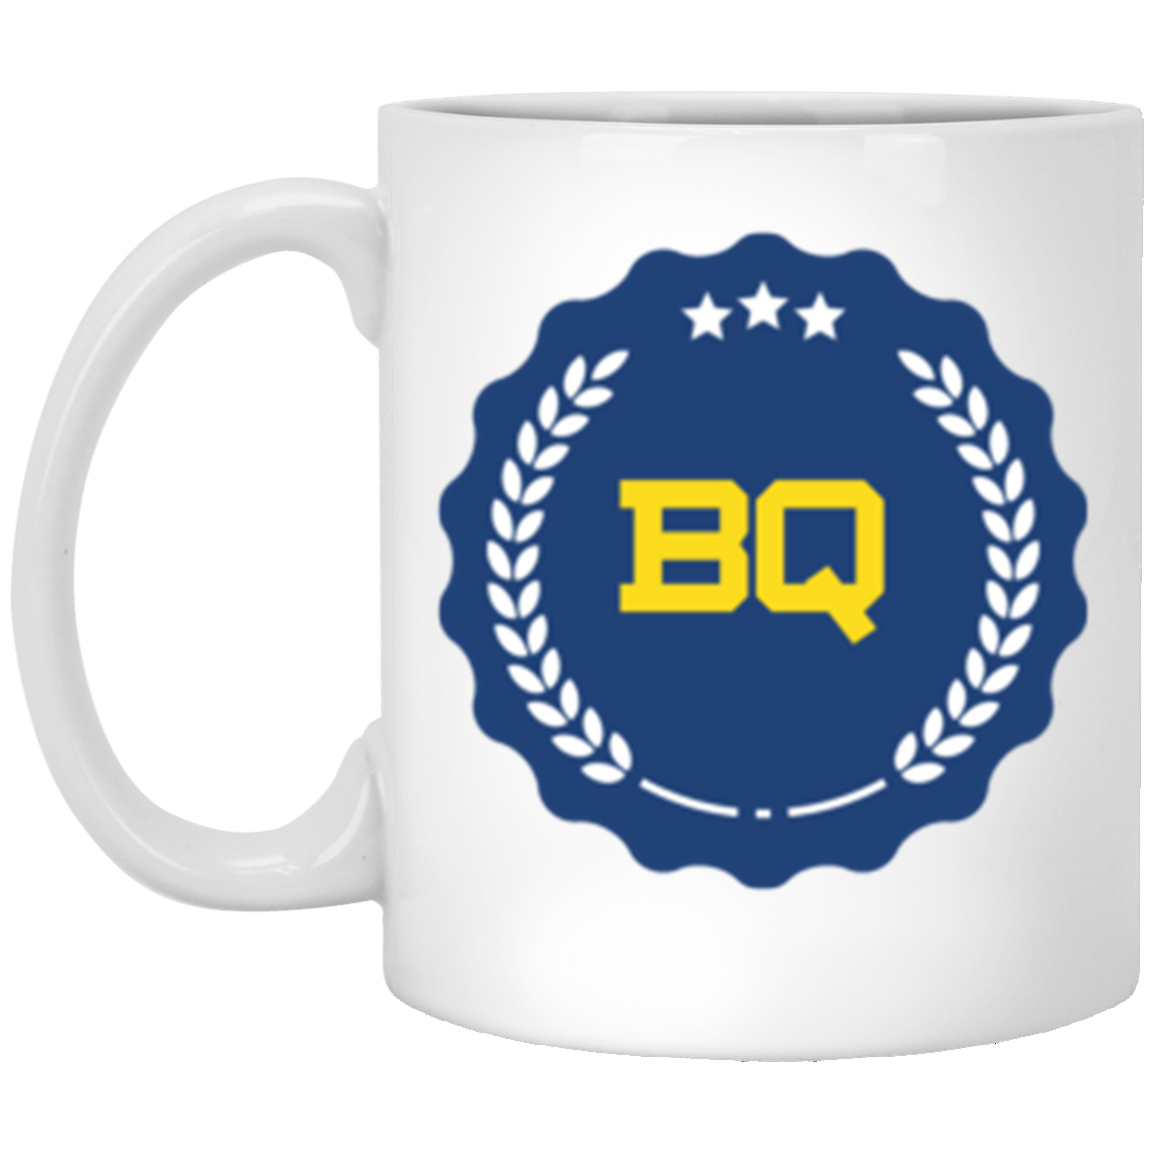 BQ Mug